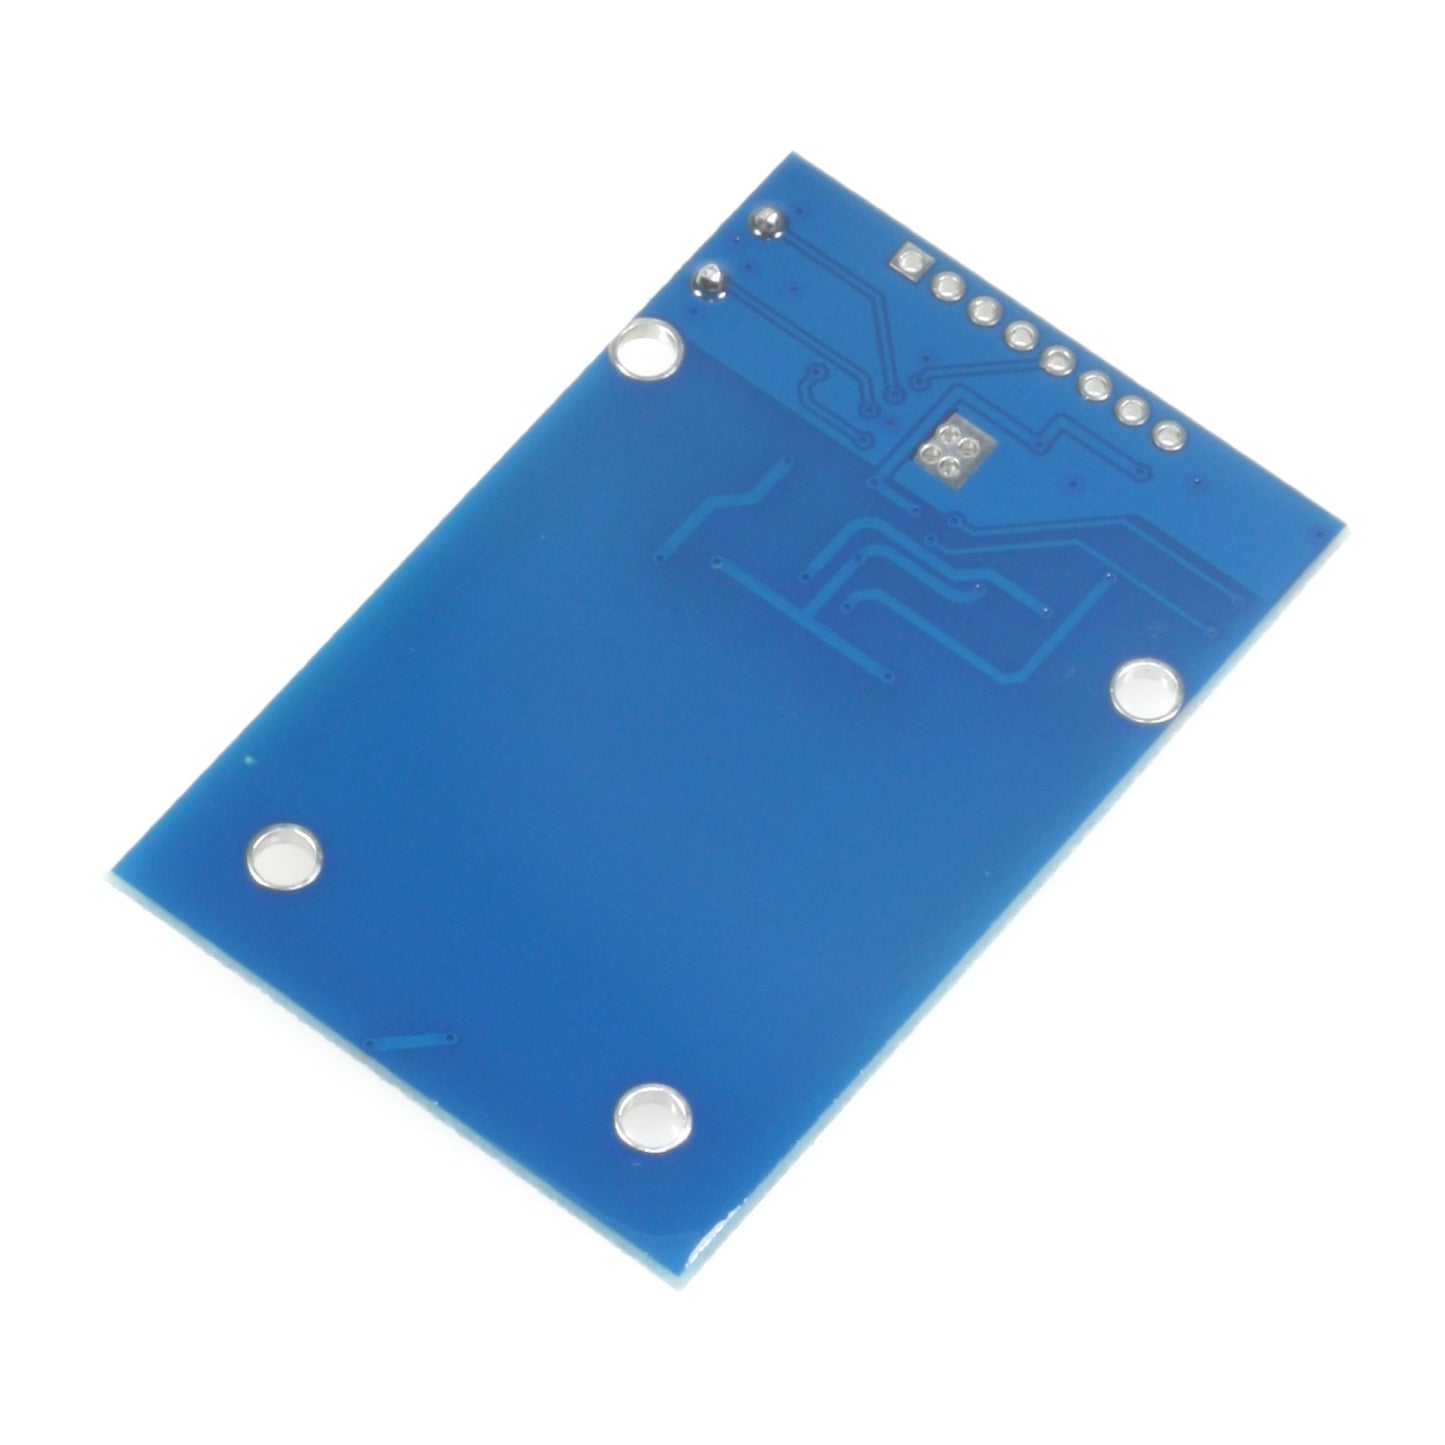 RFID-Kit RC522 mit MIFARE Transponder und Karte